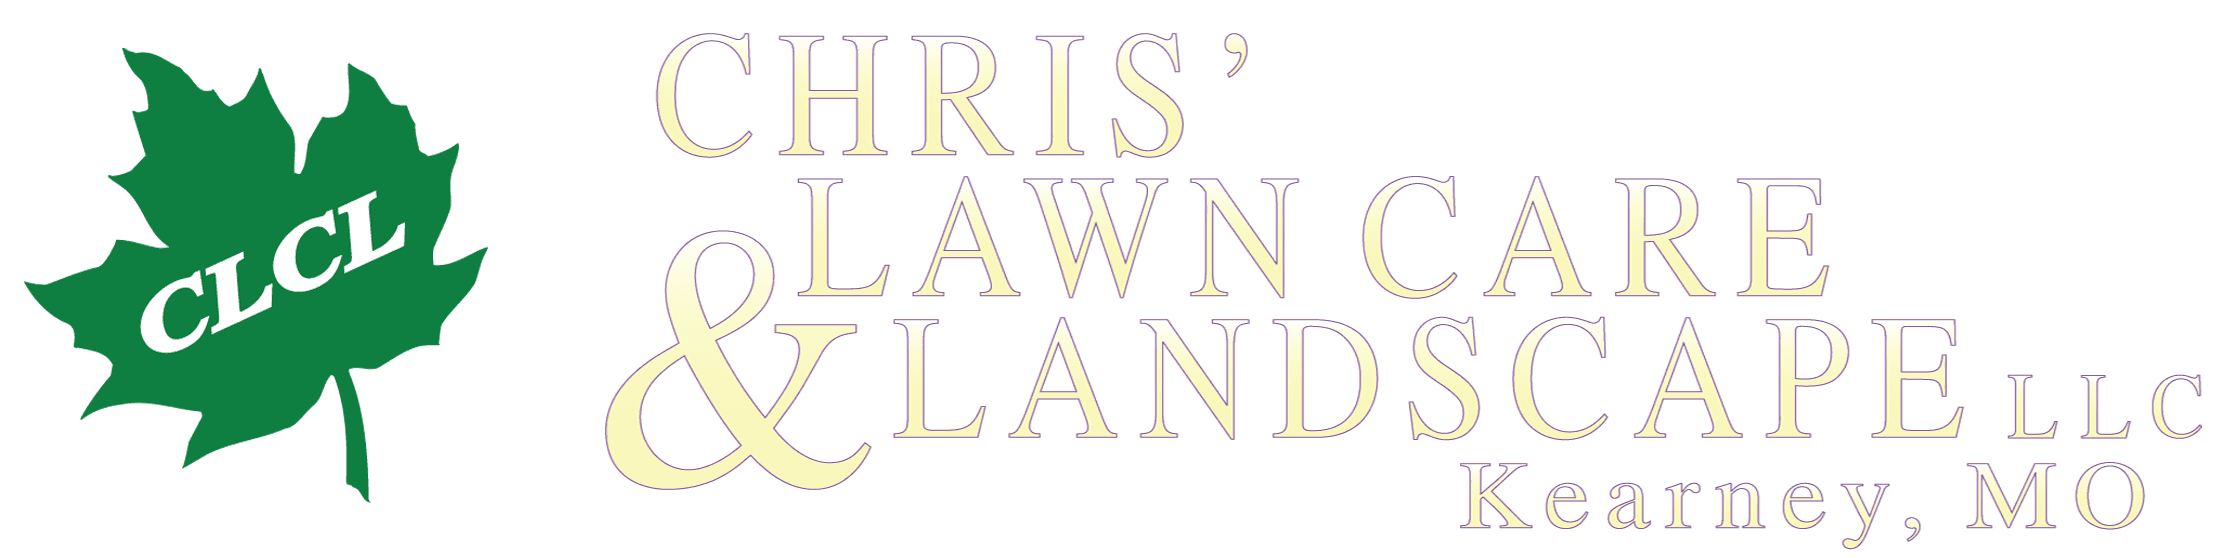 Chris' Lawn Care & Landscape LLC - Kearney, MO Logo